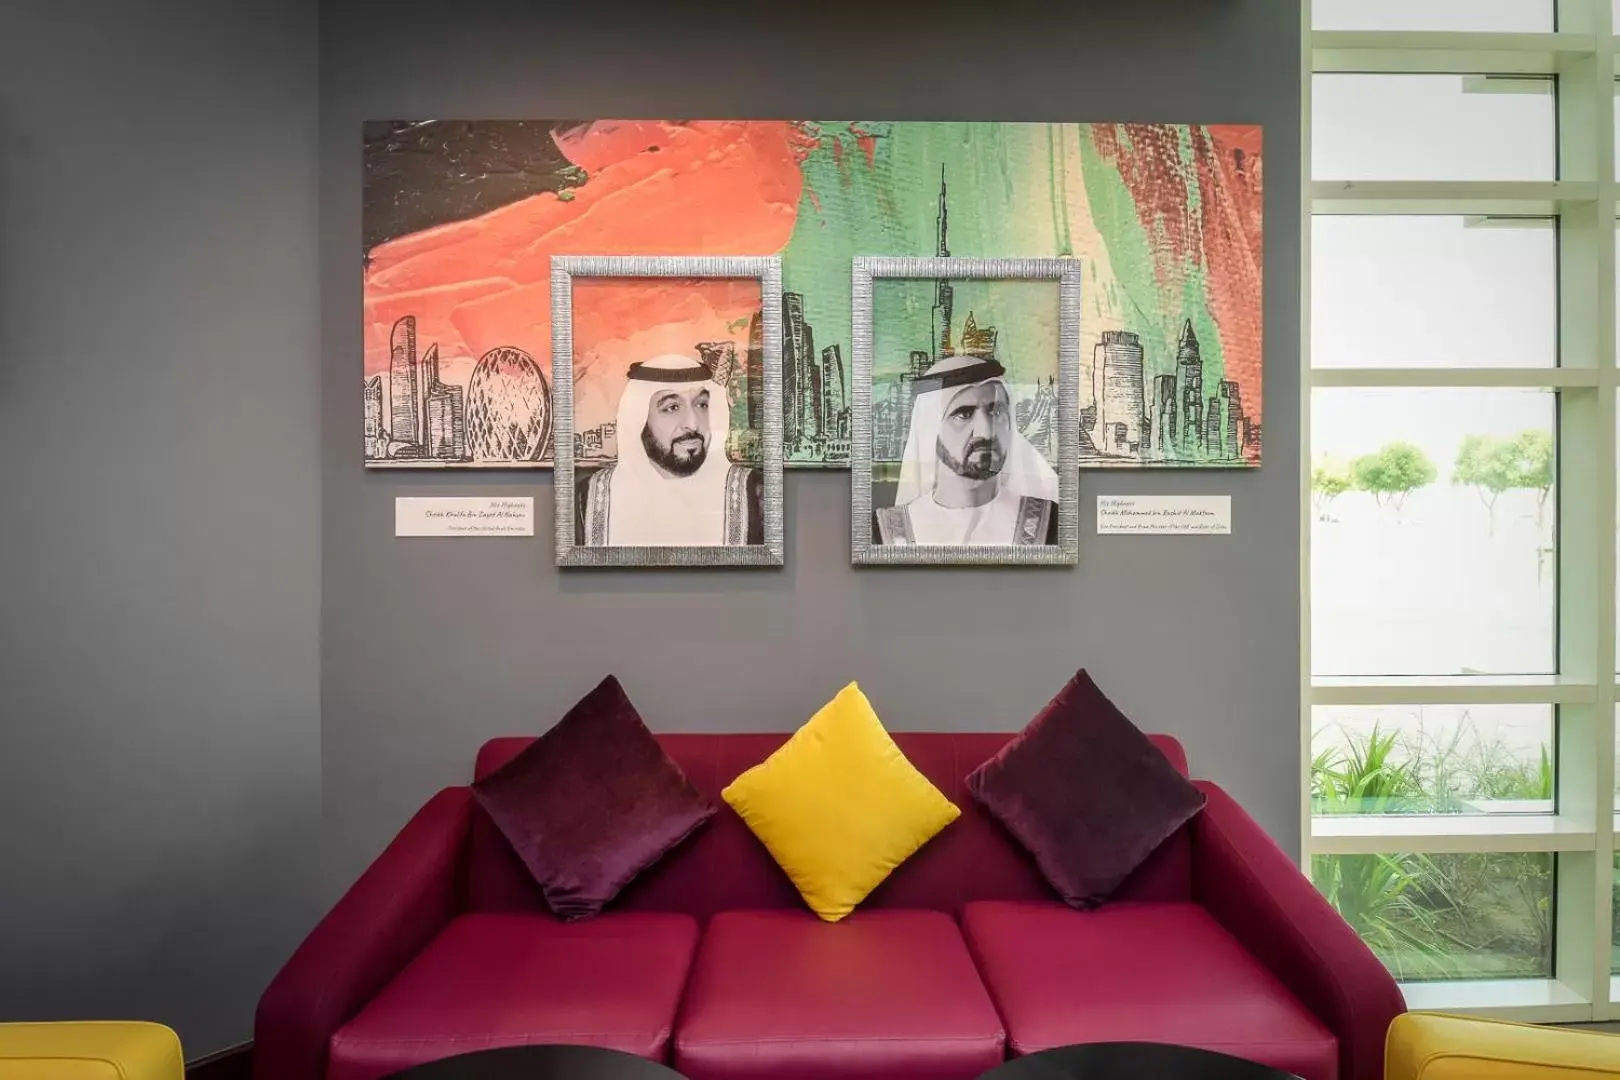 Lobby or reception in Premier Inn Dubai Silicon Oasis